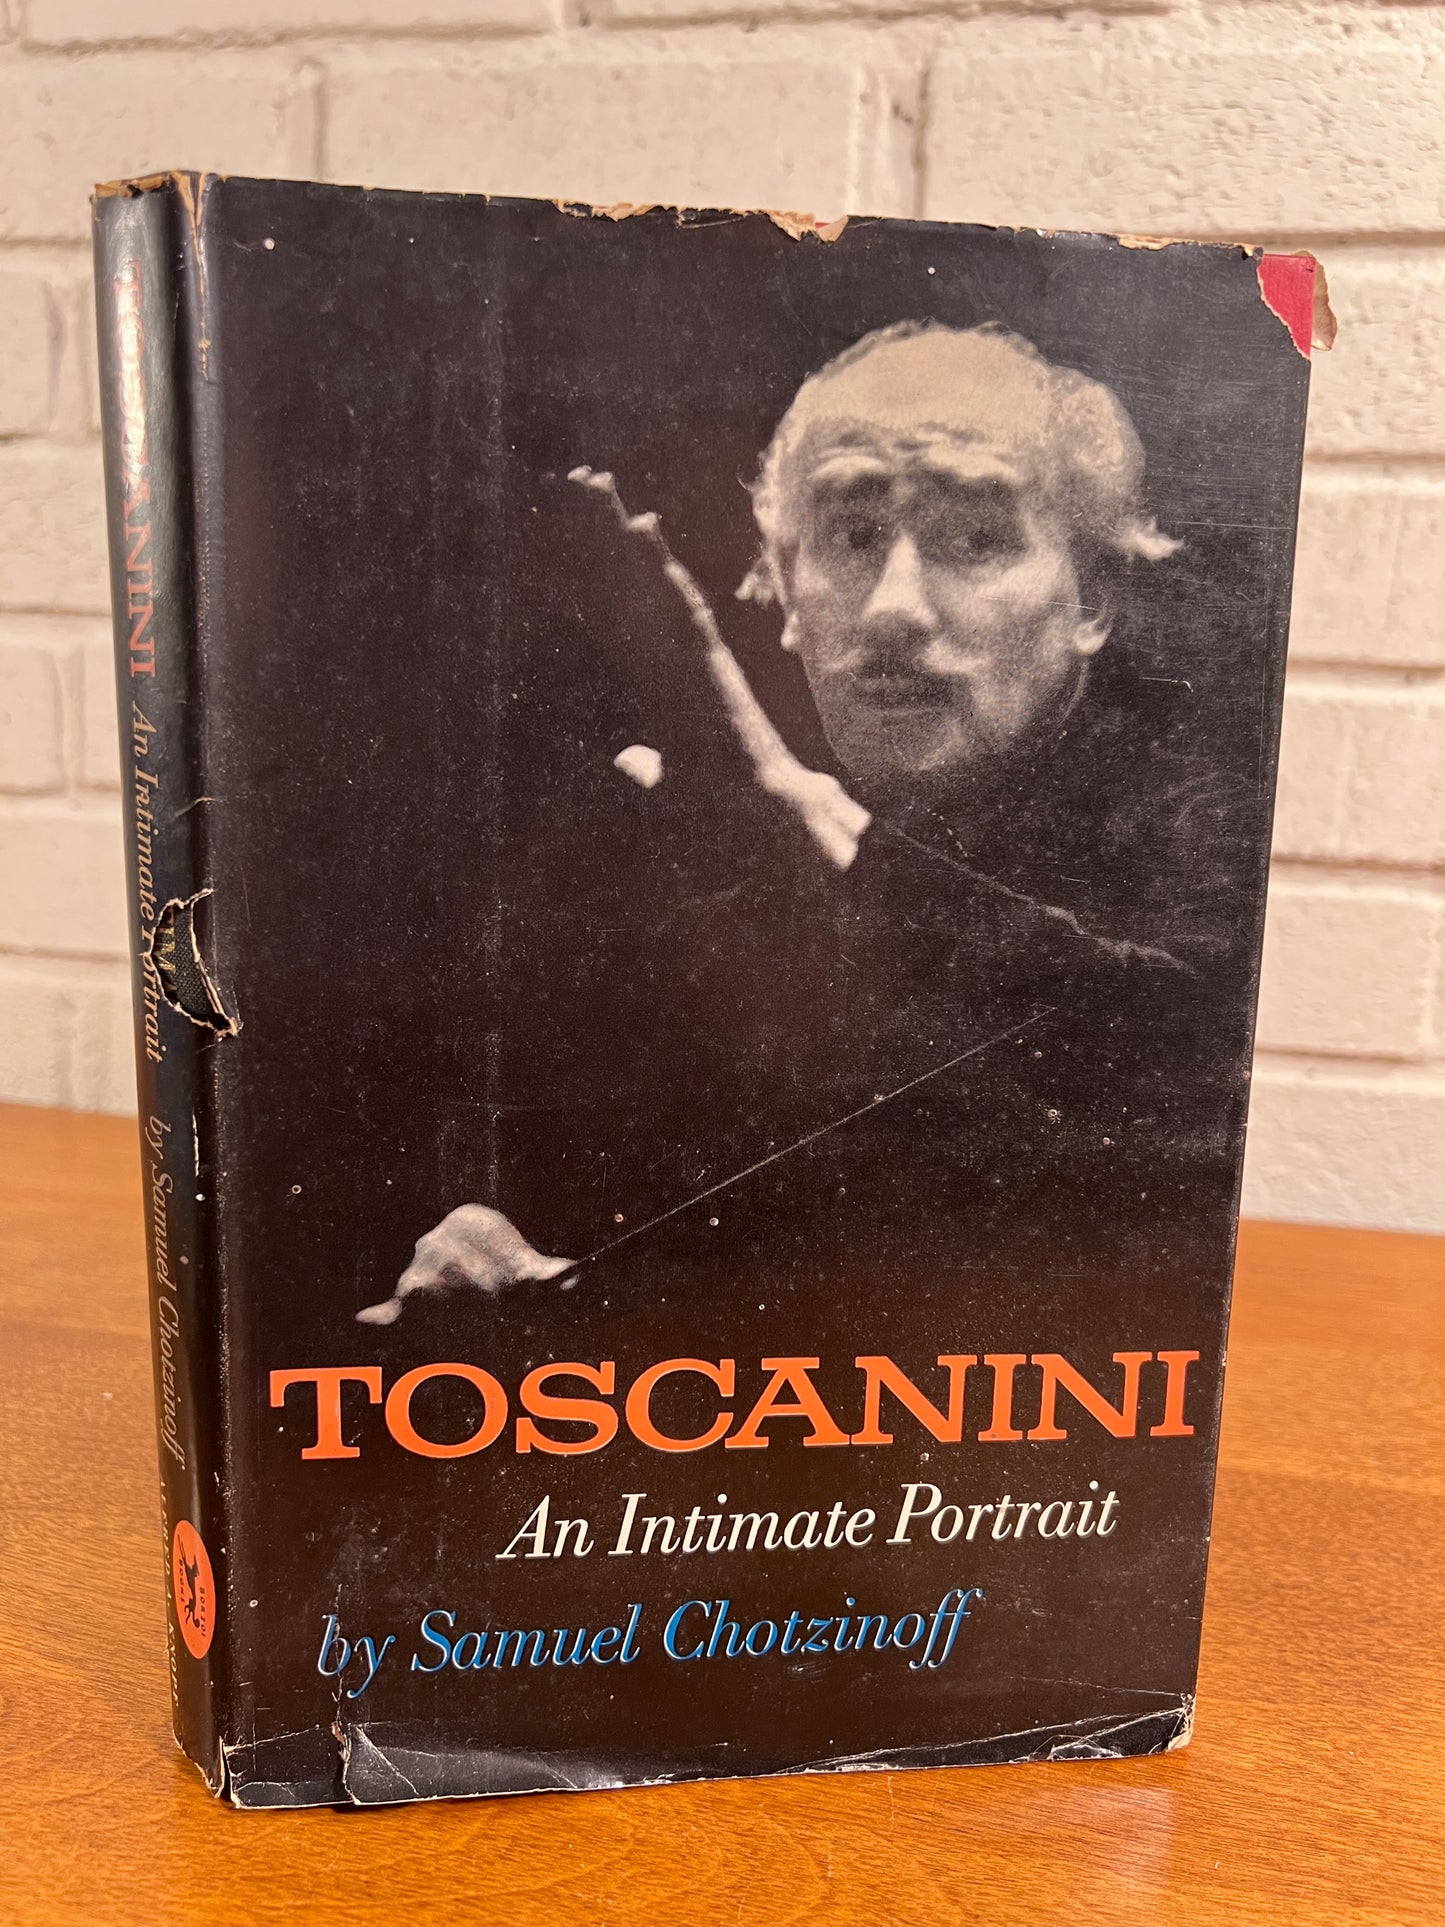 Toscanini: An Intimate Portrait by Samuel Chotzinoff